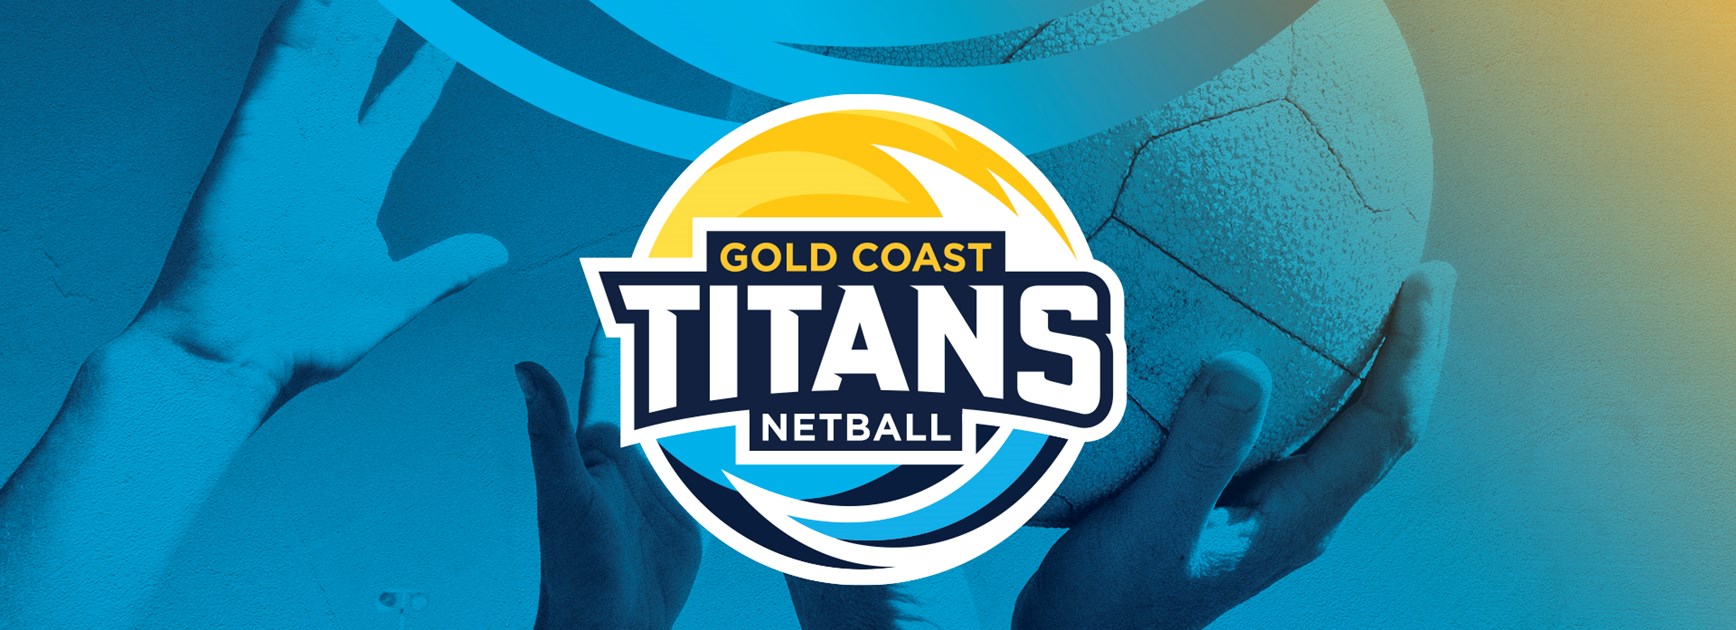 Gold Coast Titans Netball